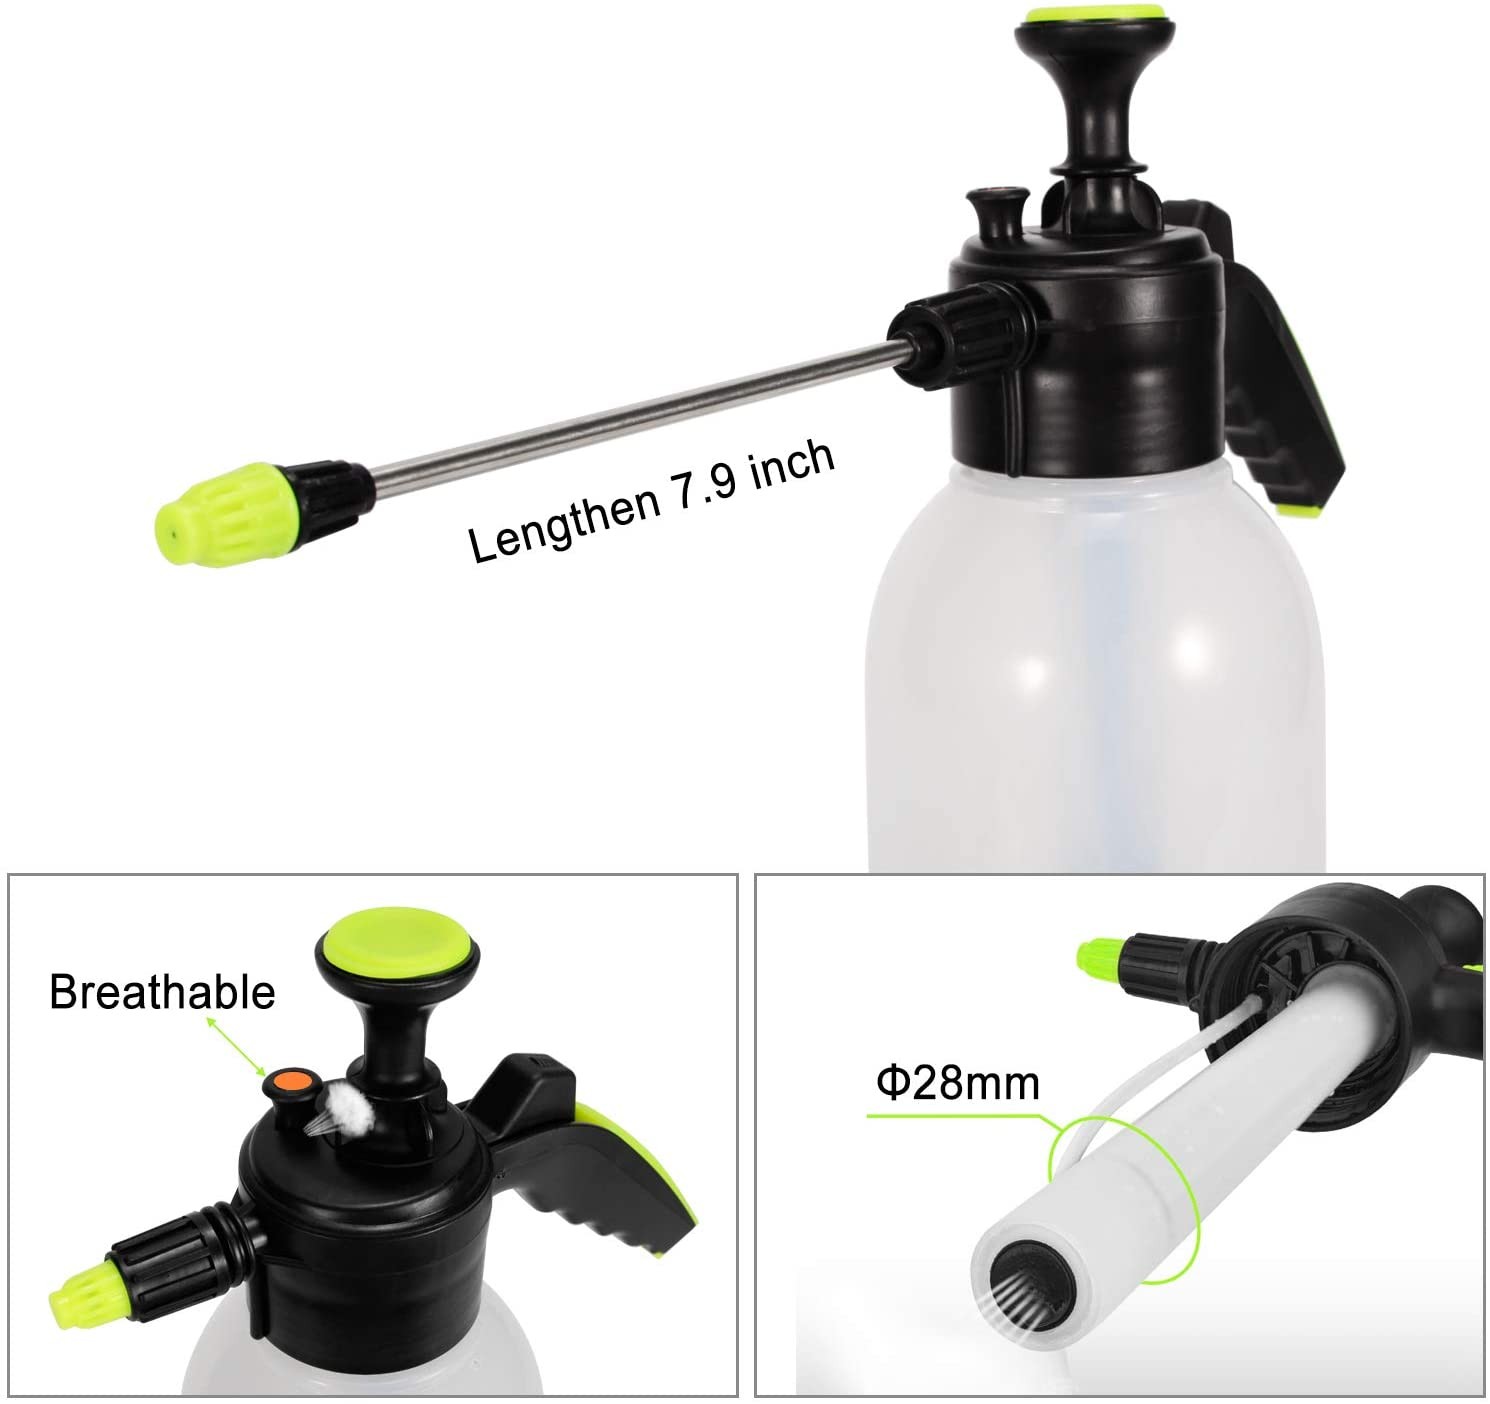 Hand Pressure Sprayer, Spray Bottle with Adjustable Pressure Nozzle for Plants & Gardens